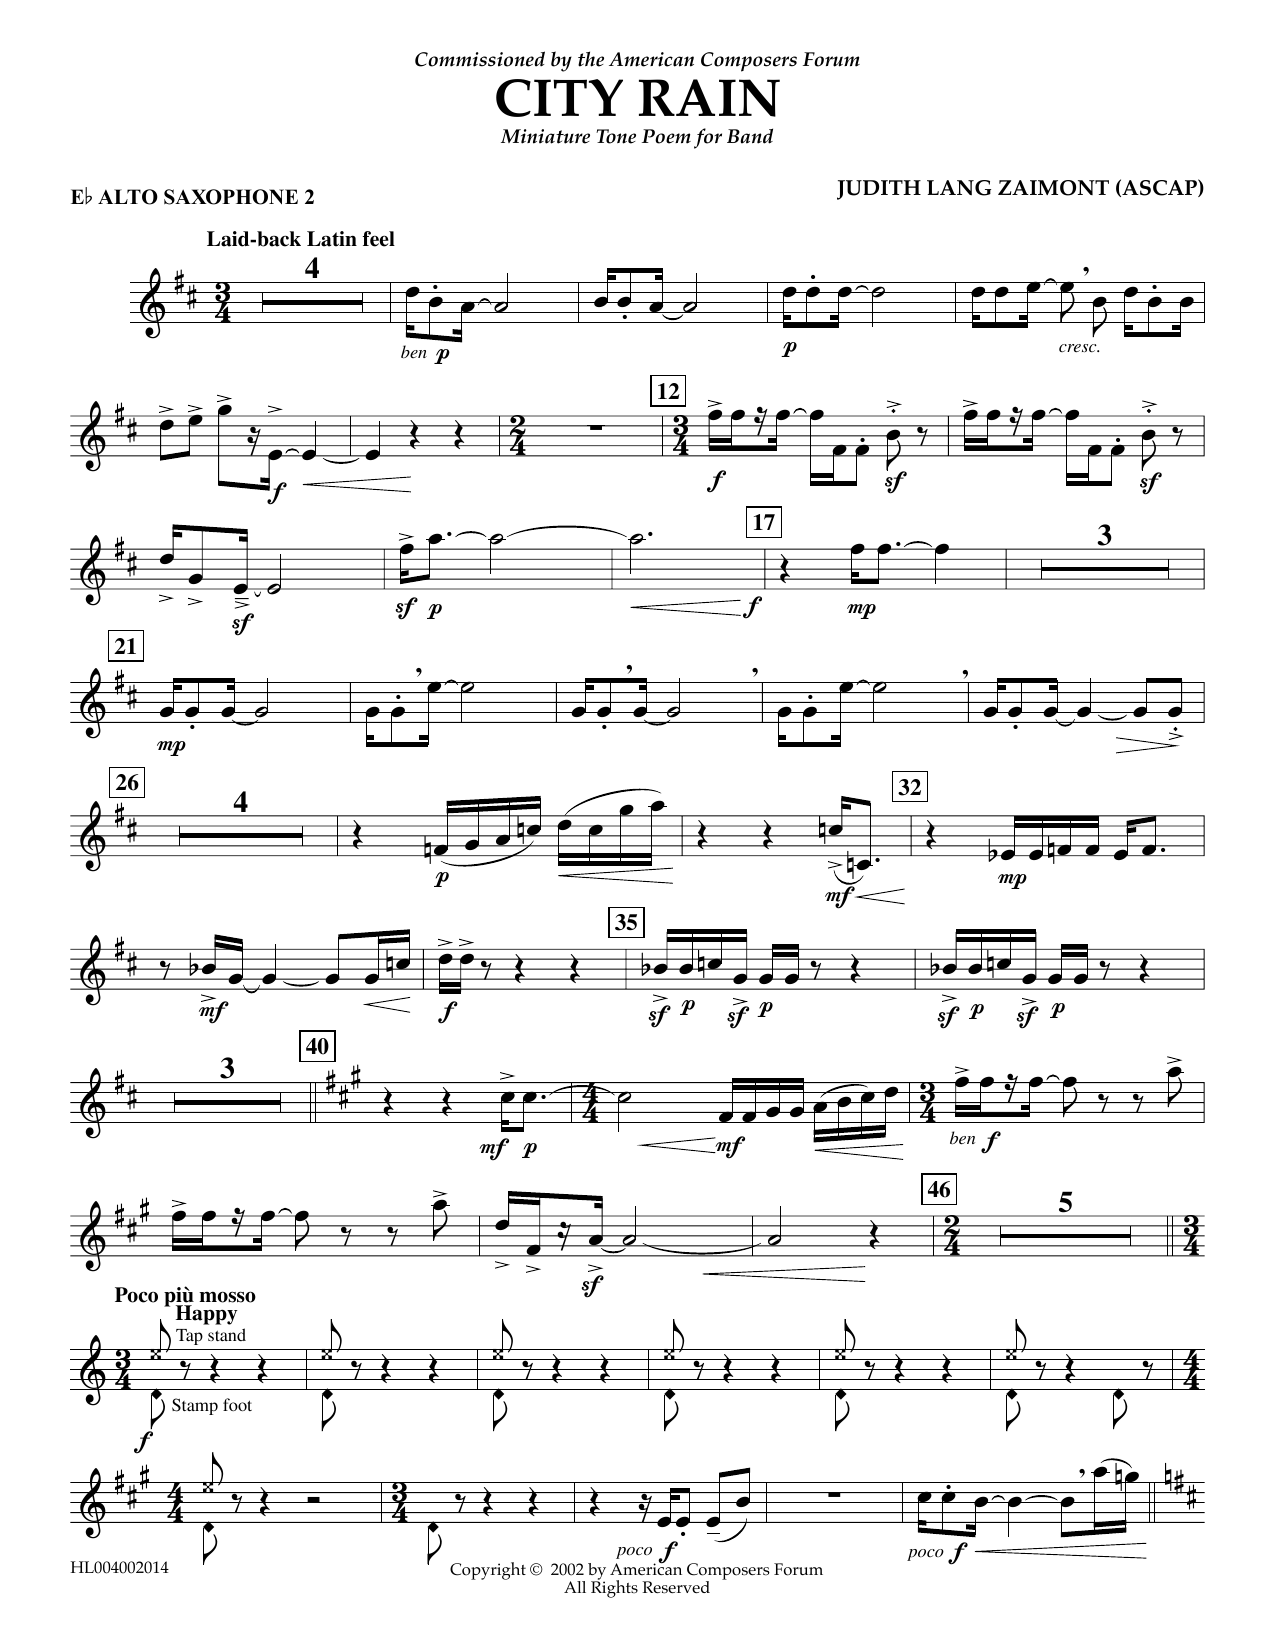 Download Judith Zaimont City Rain - Eb Alto Saxophone 2 Sheet Music